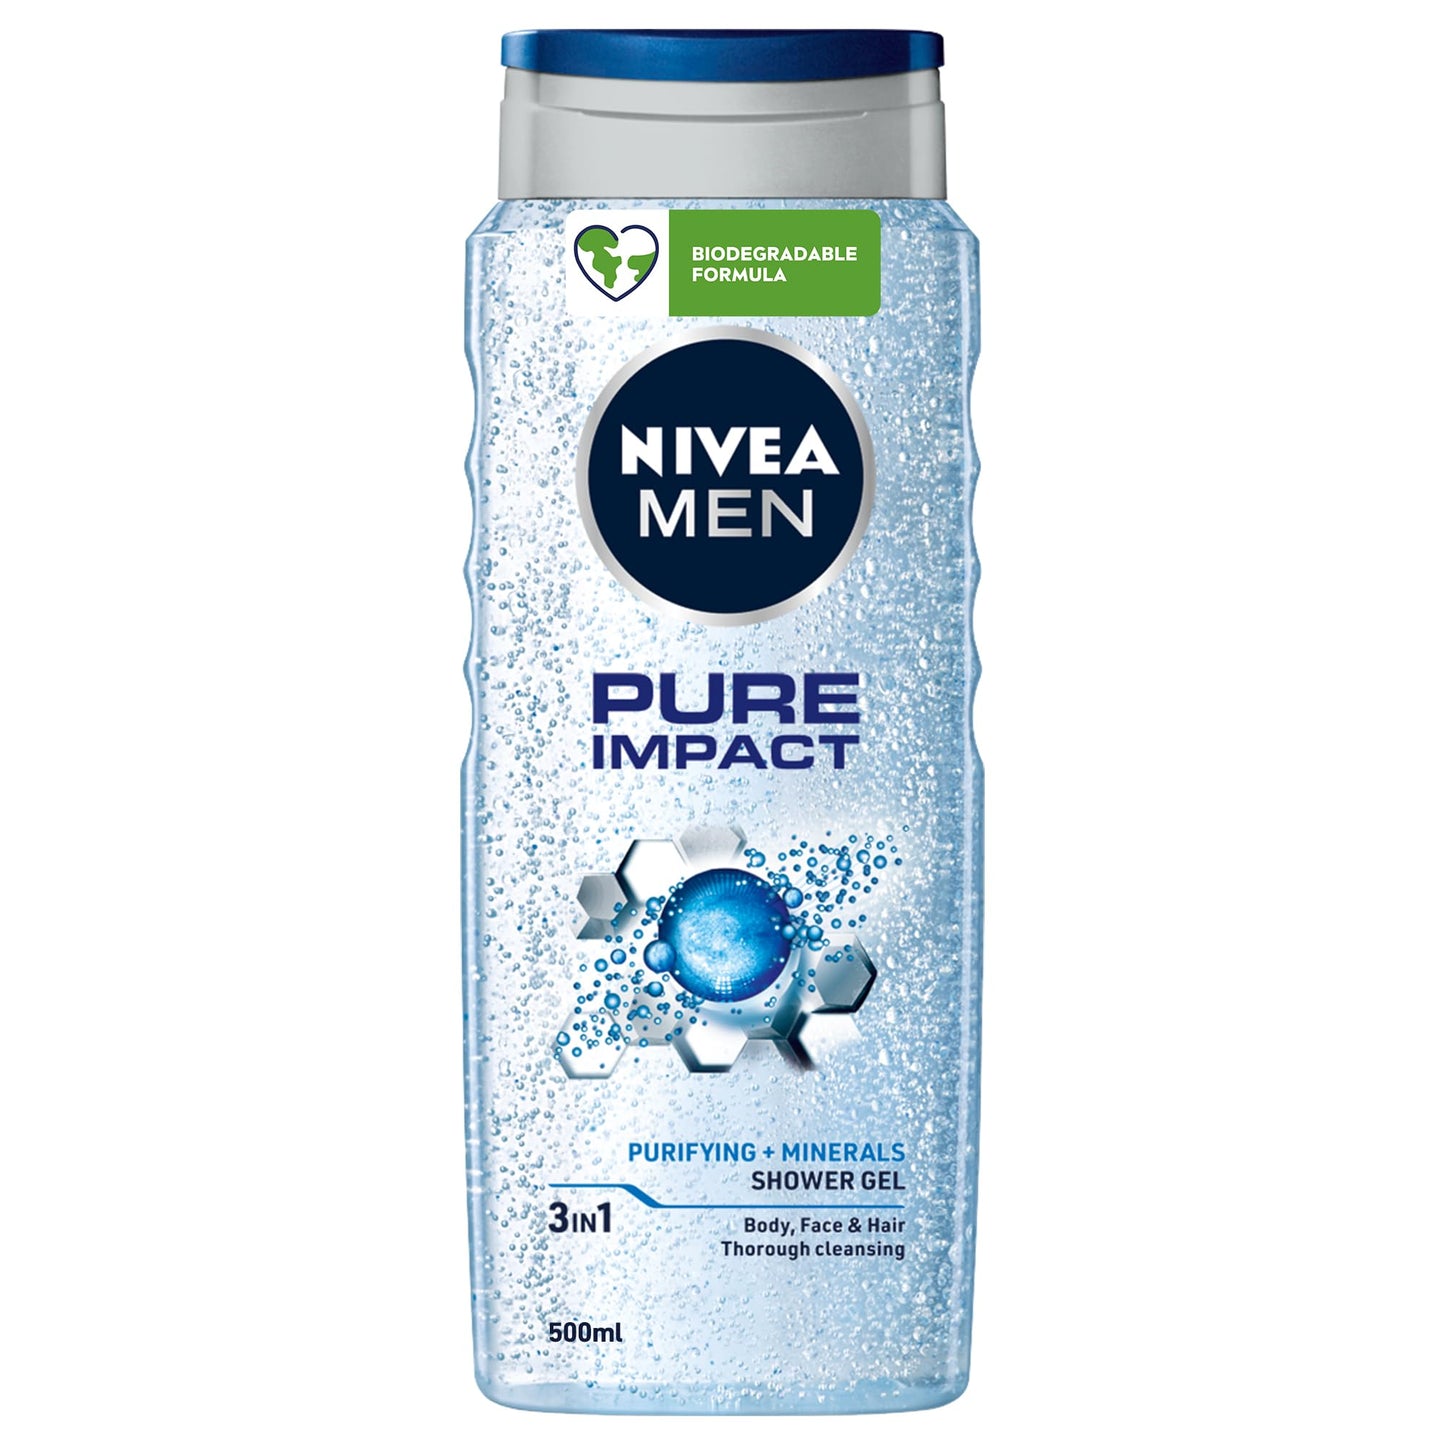 NIVEA MEN Pure Impact Shower Gel 500ml